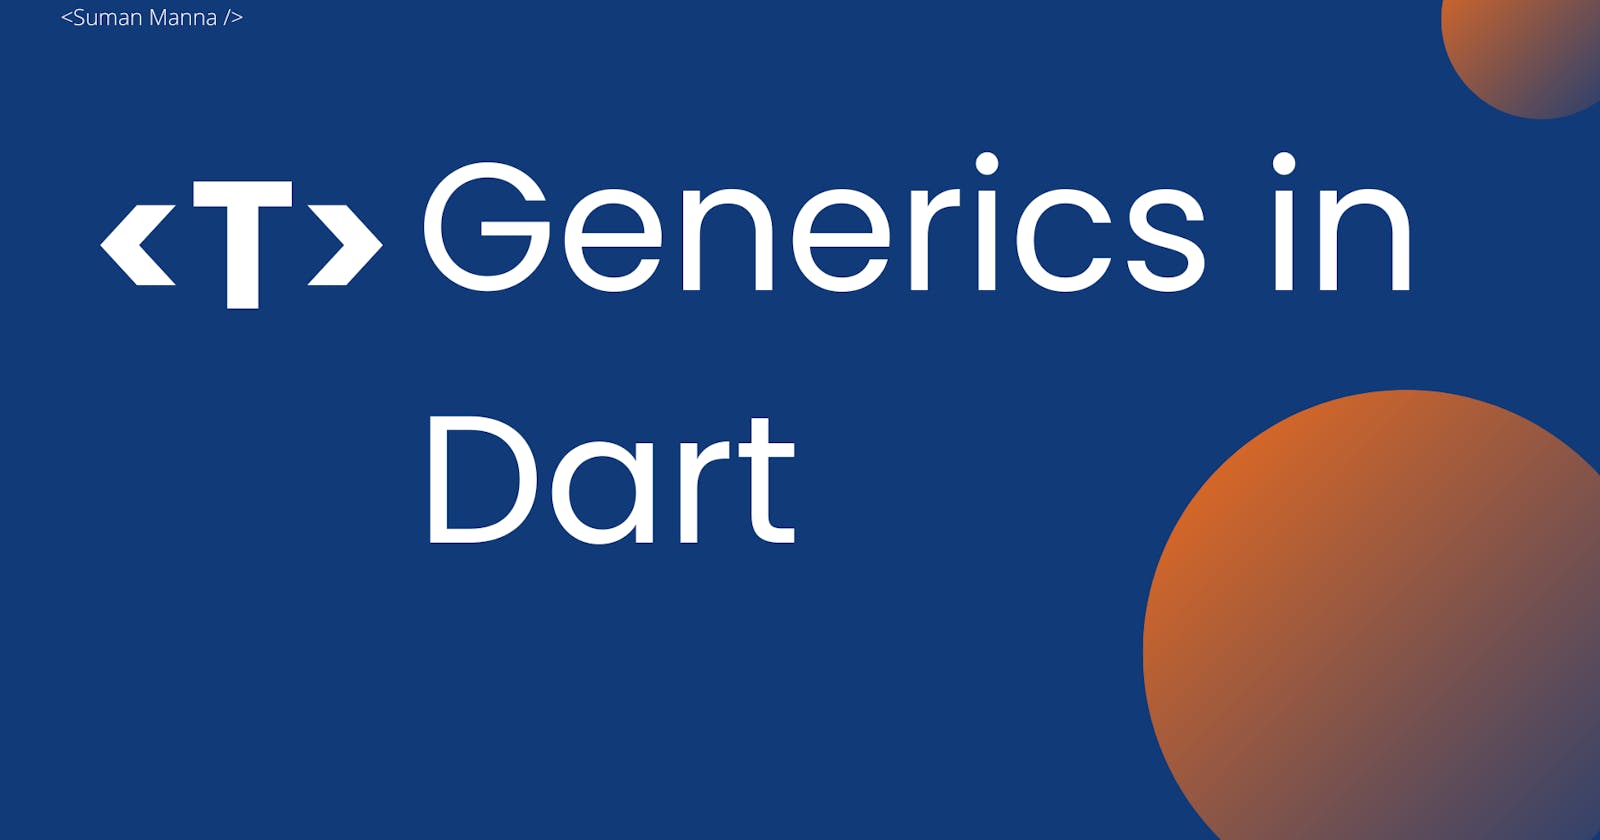 Generics in dart